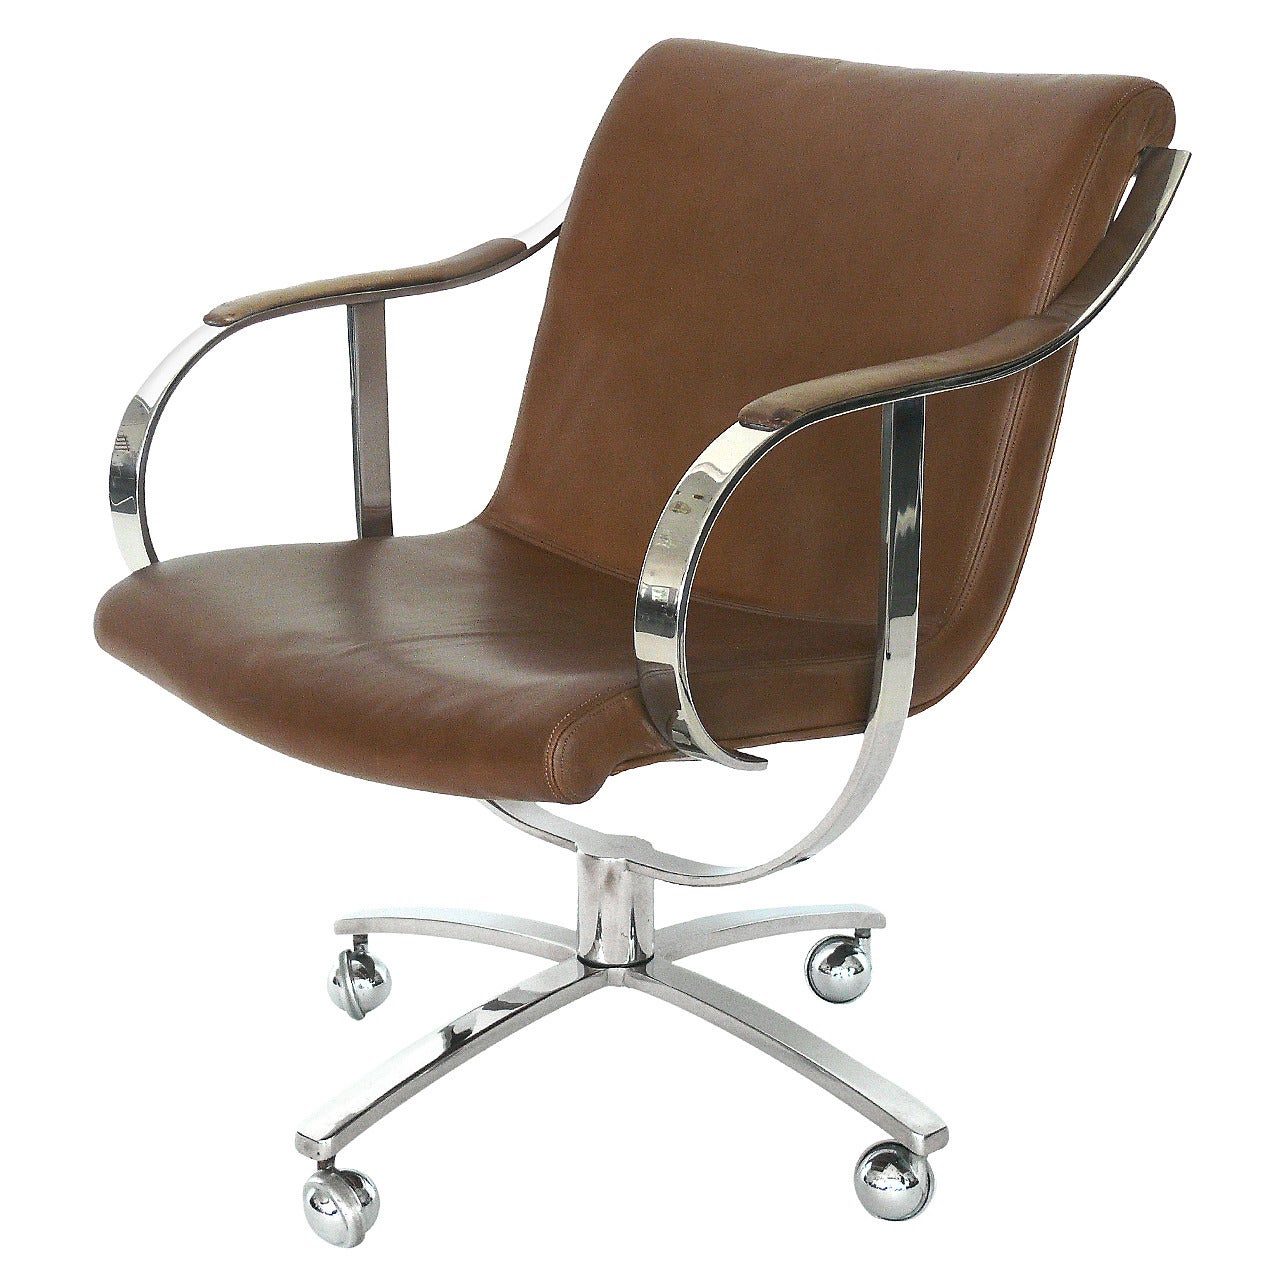 Steelcase Chair by Gardner Leaver